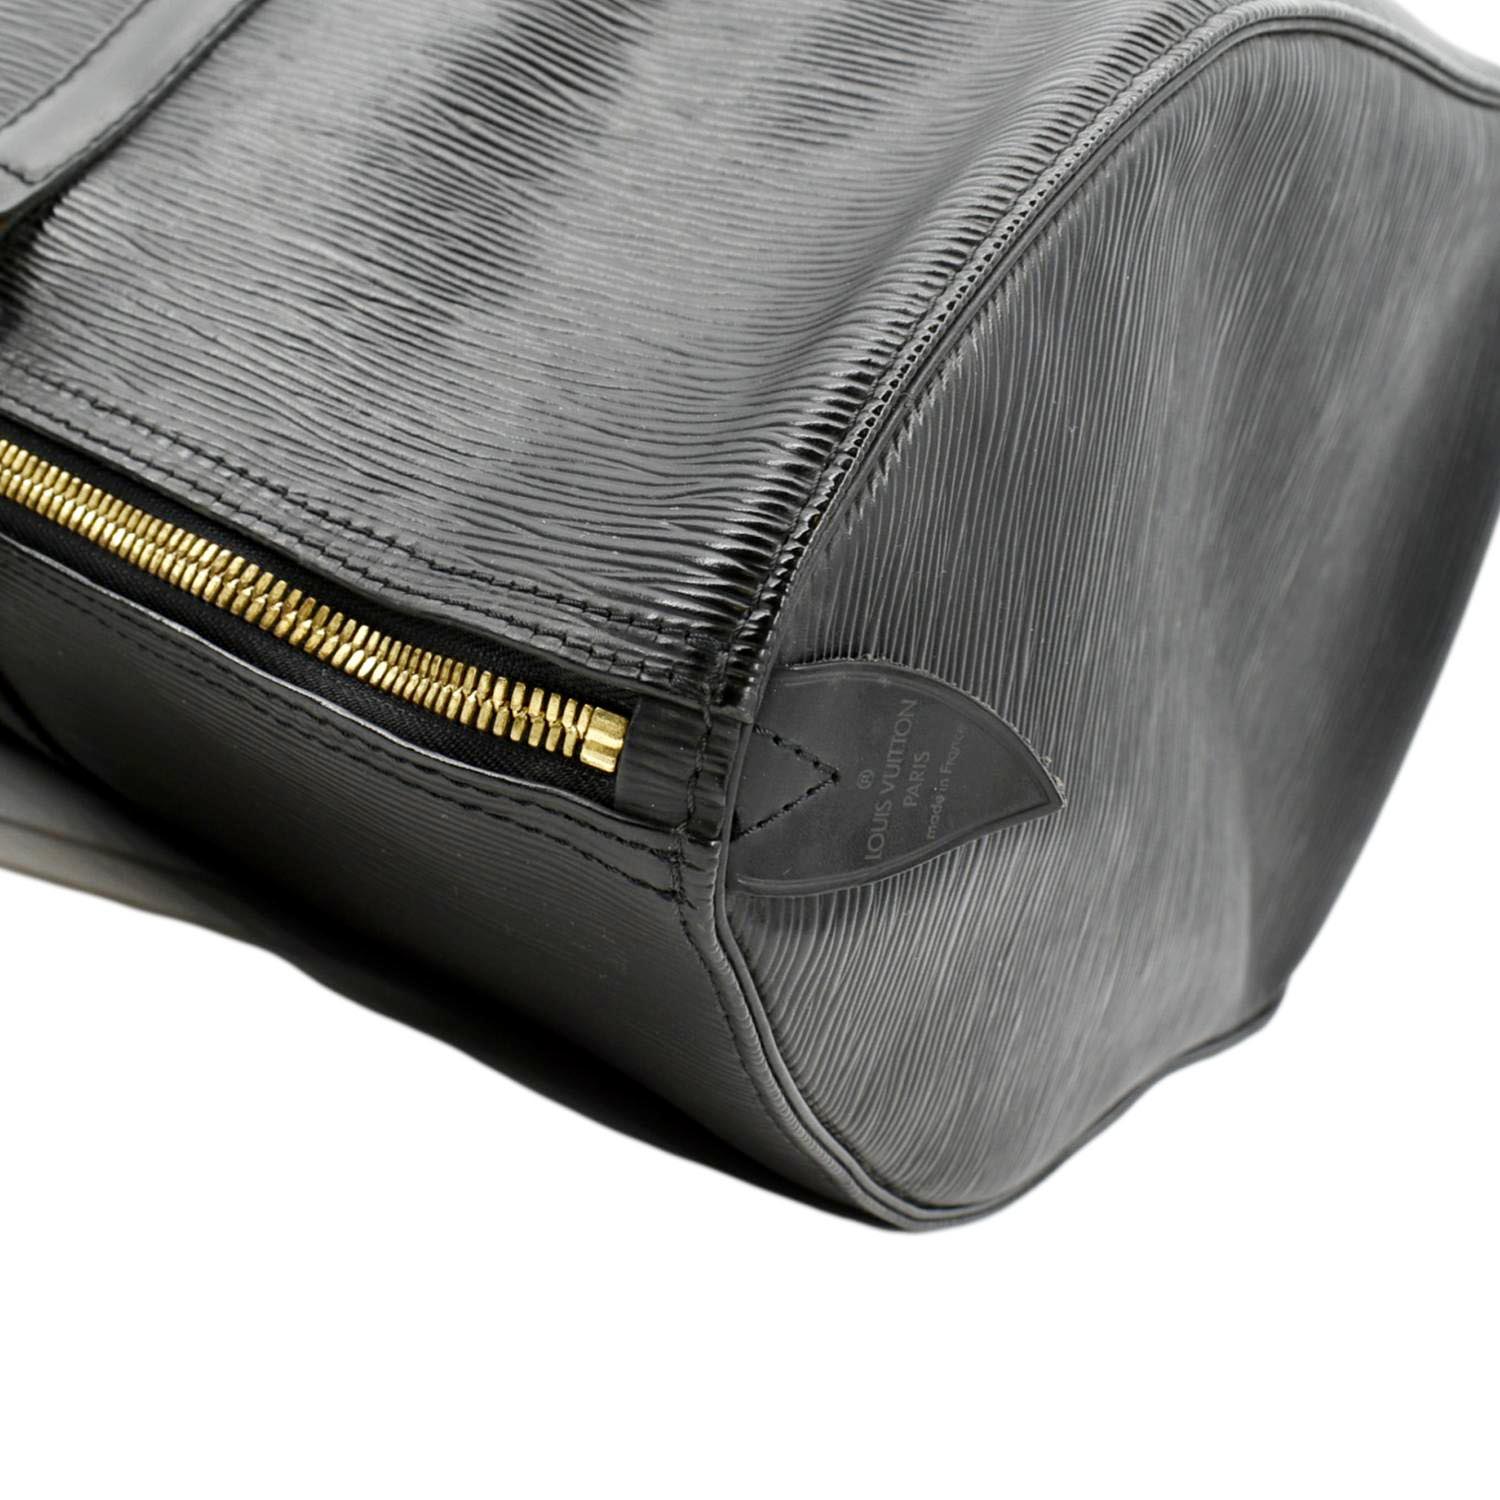 Louis Vuitton Keepall 45 EPI Leather Travel Bag Black